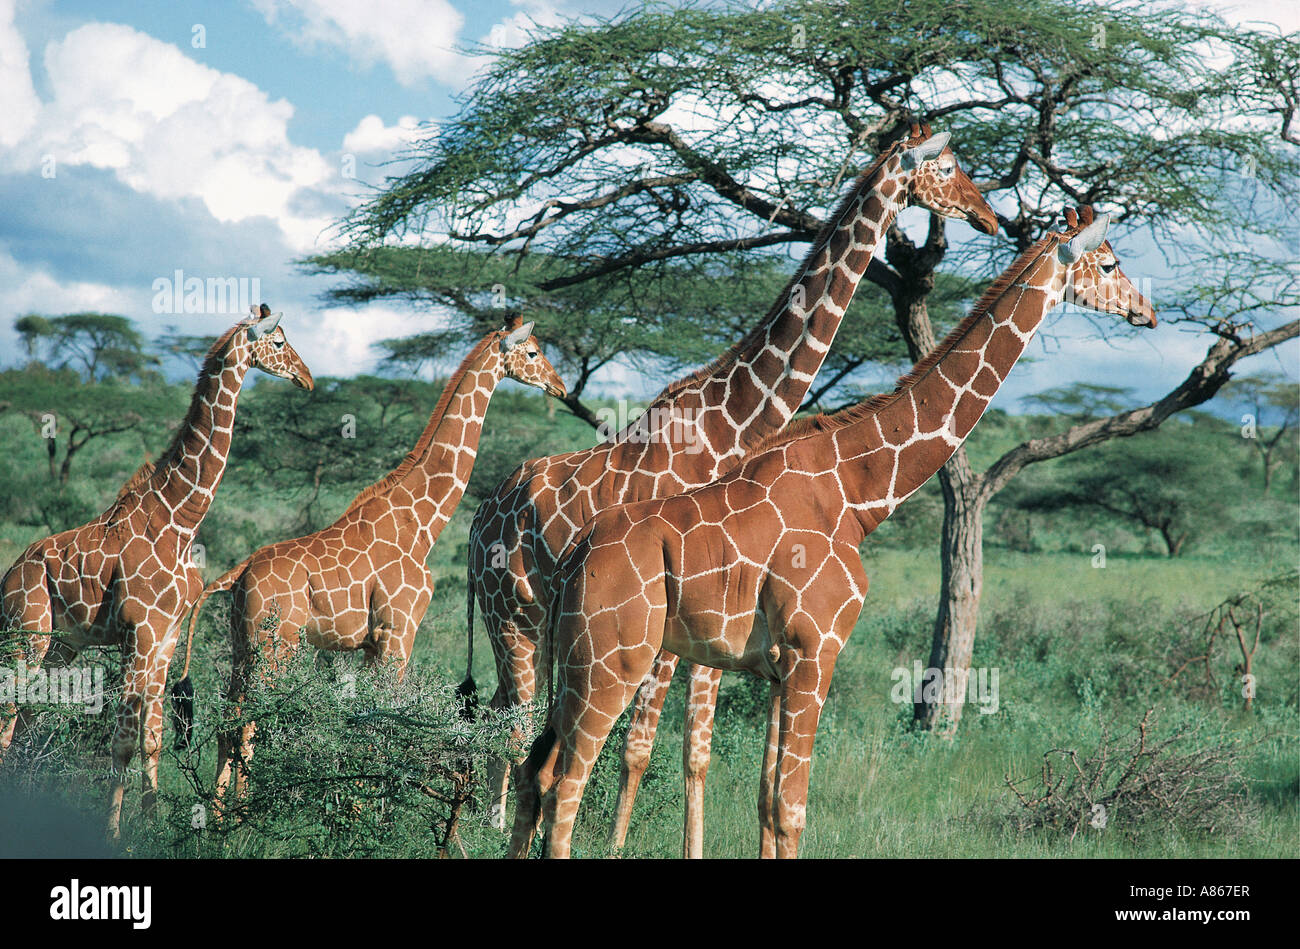 Four Reticulated Giraffe in attentive posture adopted when seeing a predator Samburu National Reserve Kenya Stock Photo